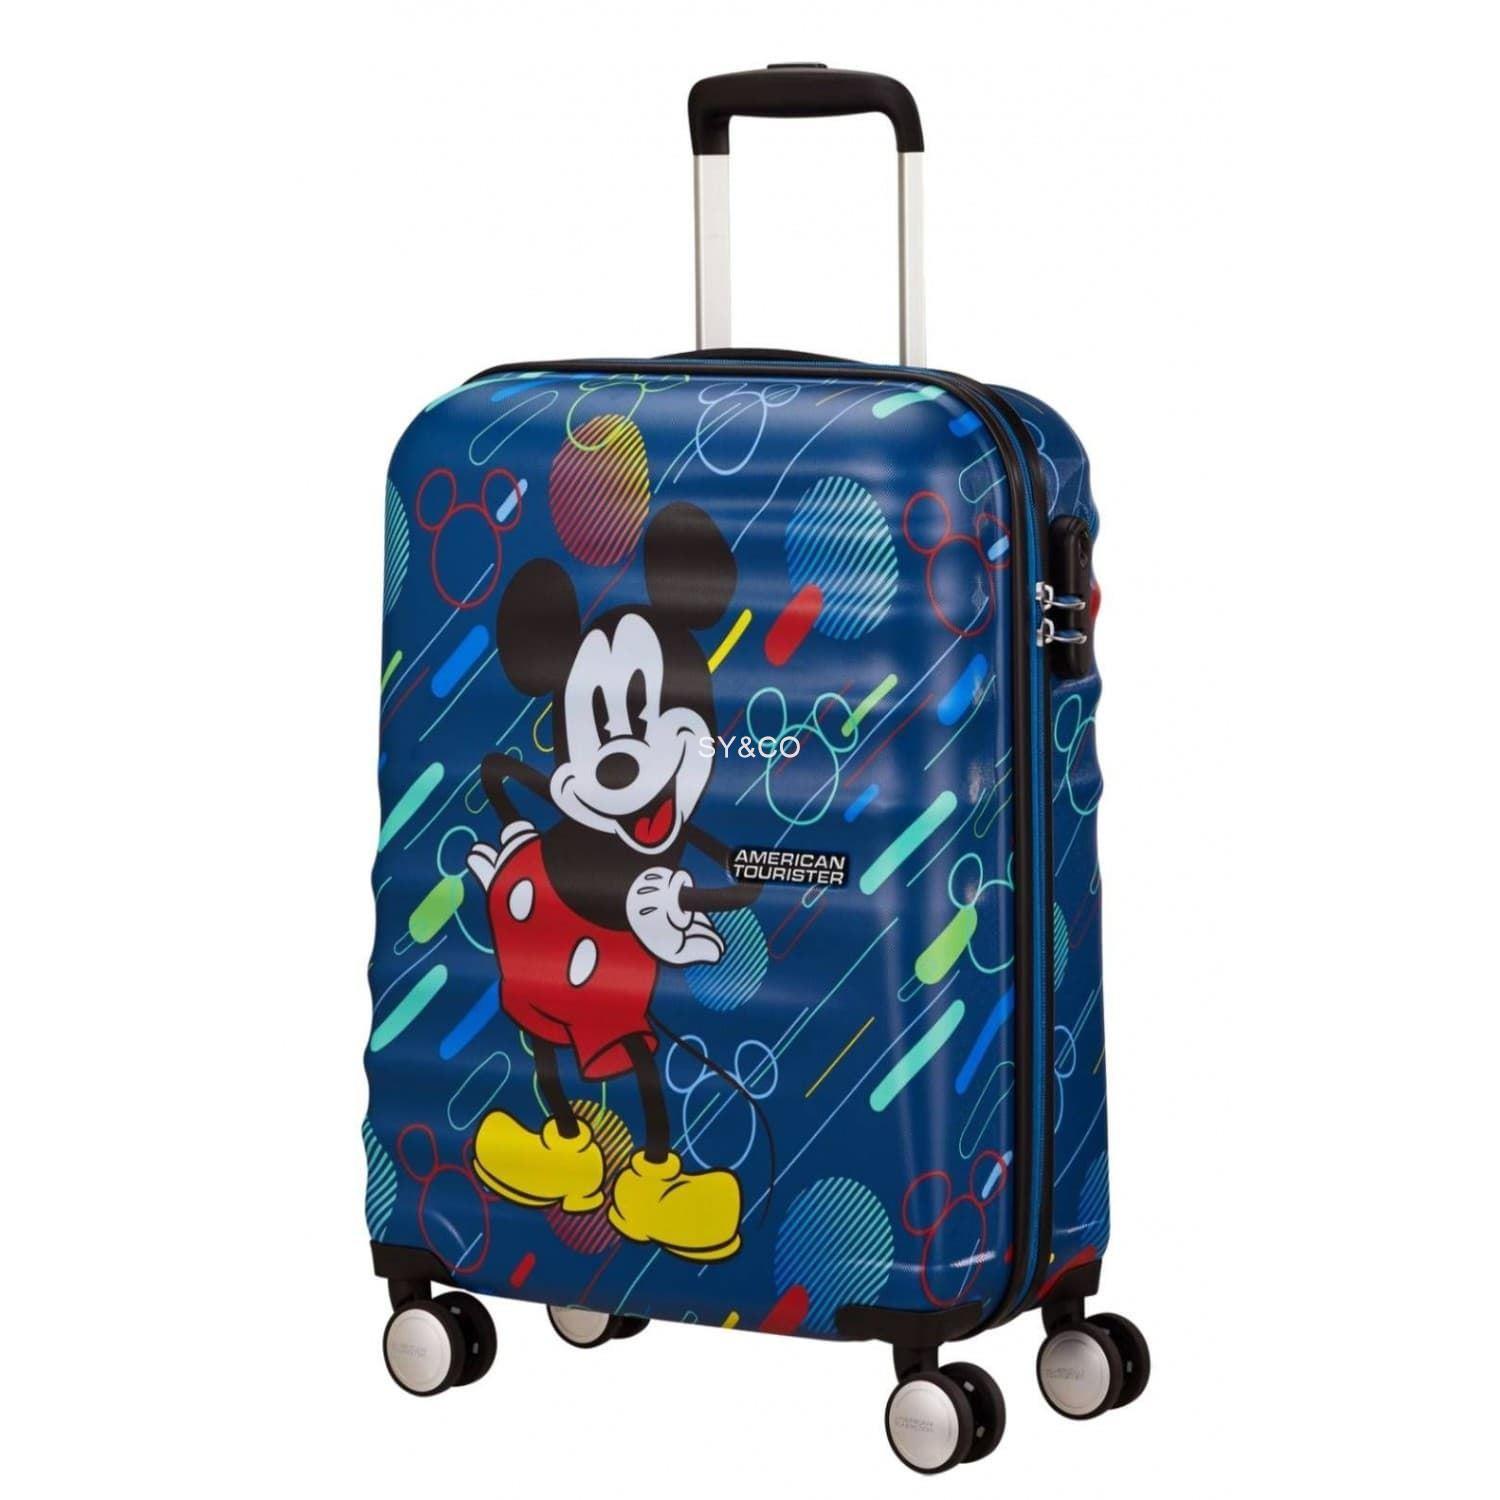 Maleta cabina Disney AMERICAN TOURISTER Mickey Future Pop 55cm - Imagen 1